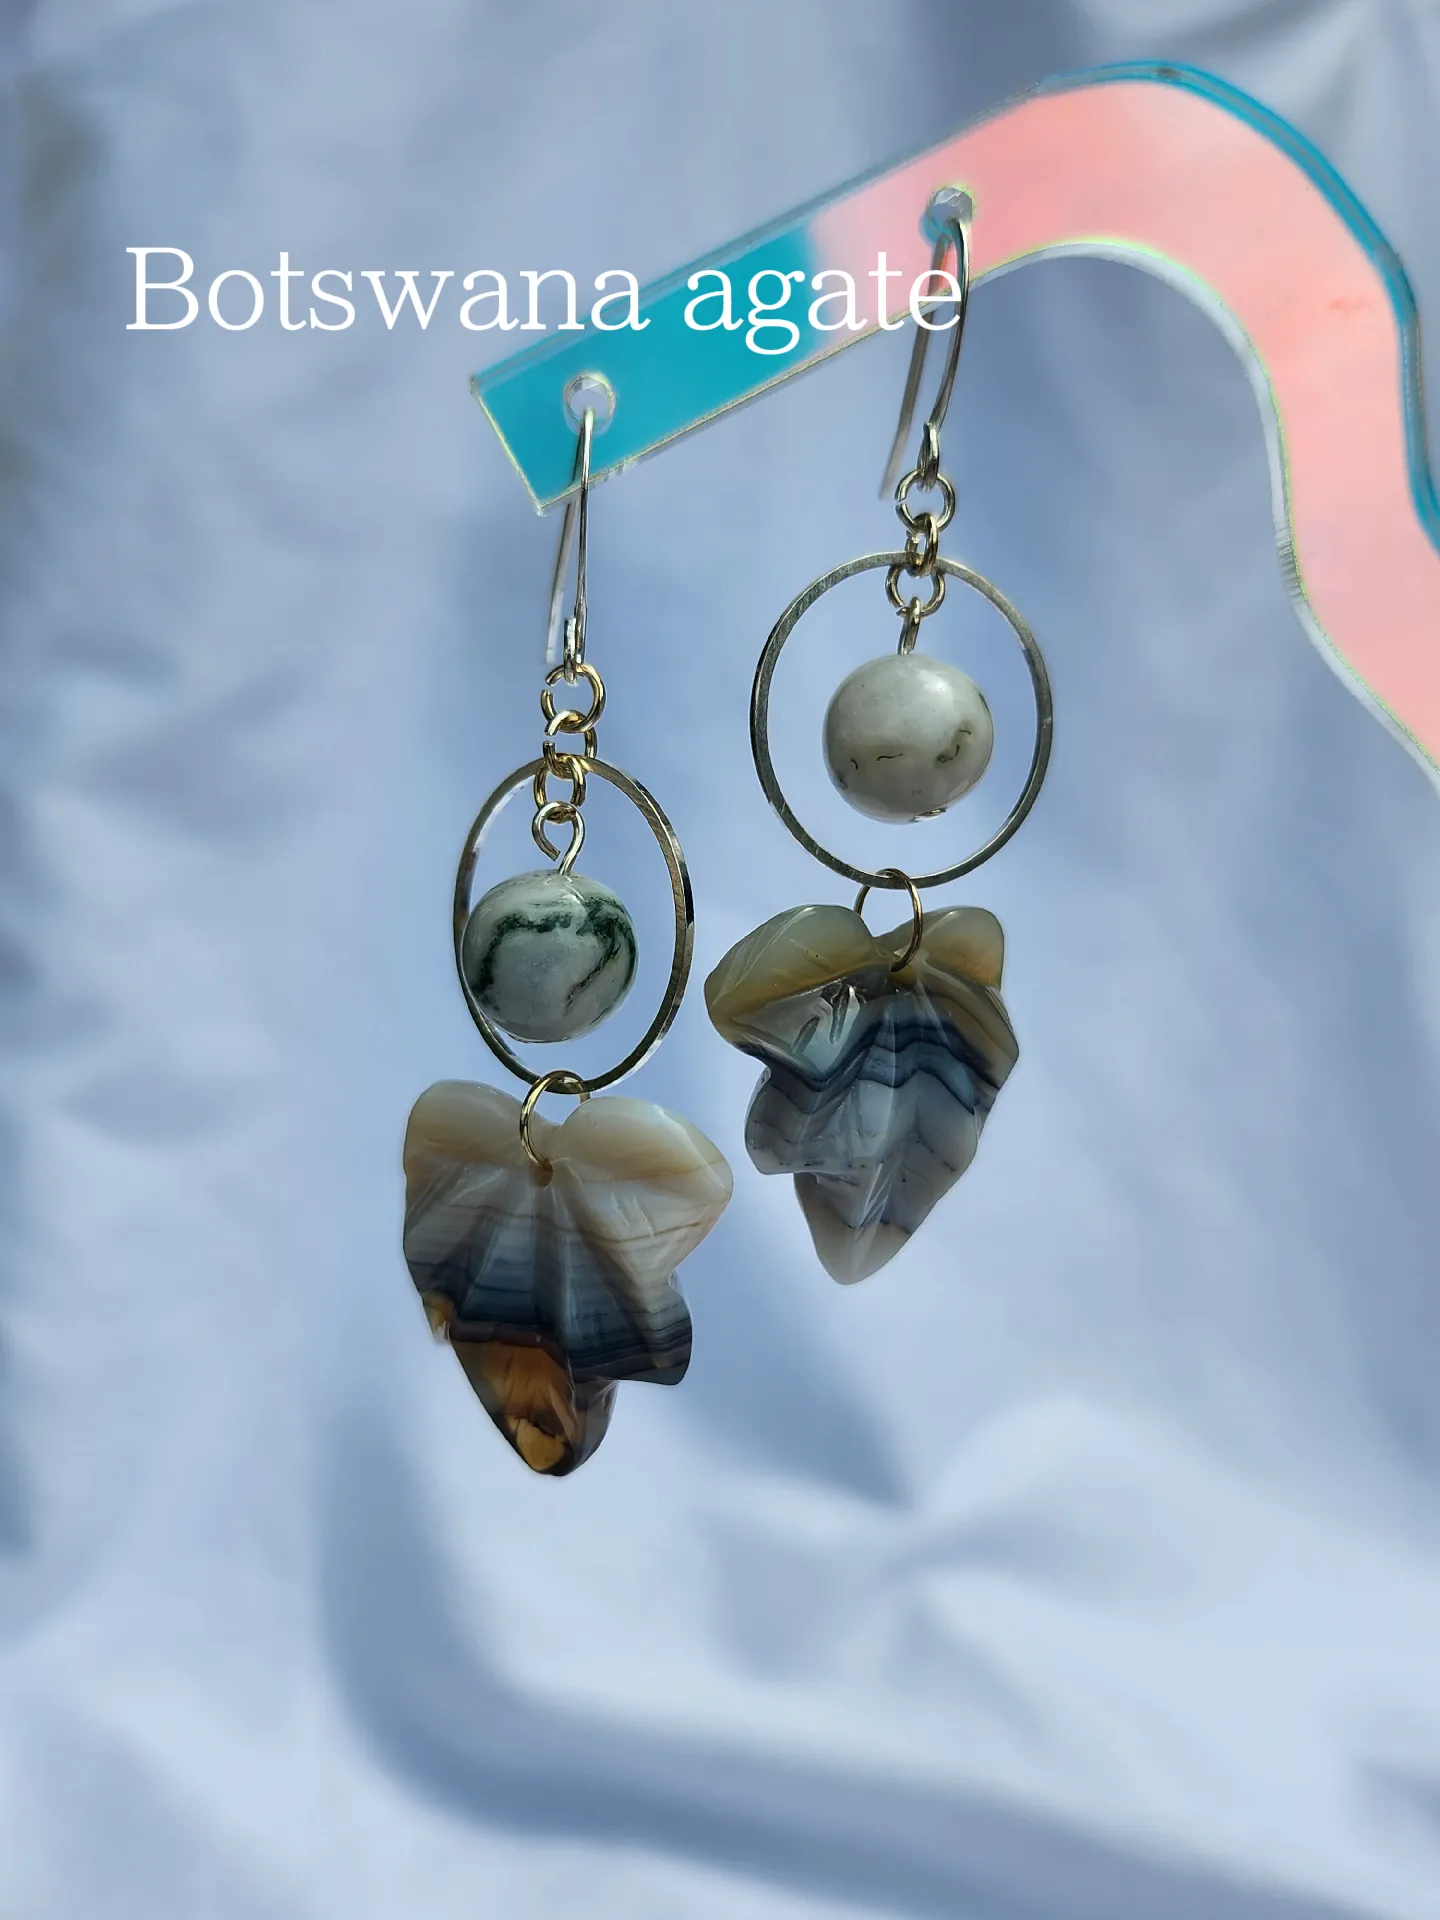 Botswana agate earrings | angelsmestudioが投稿したフォトブック